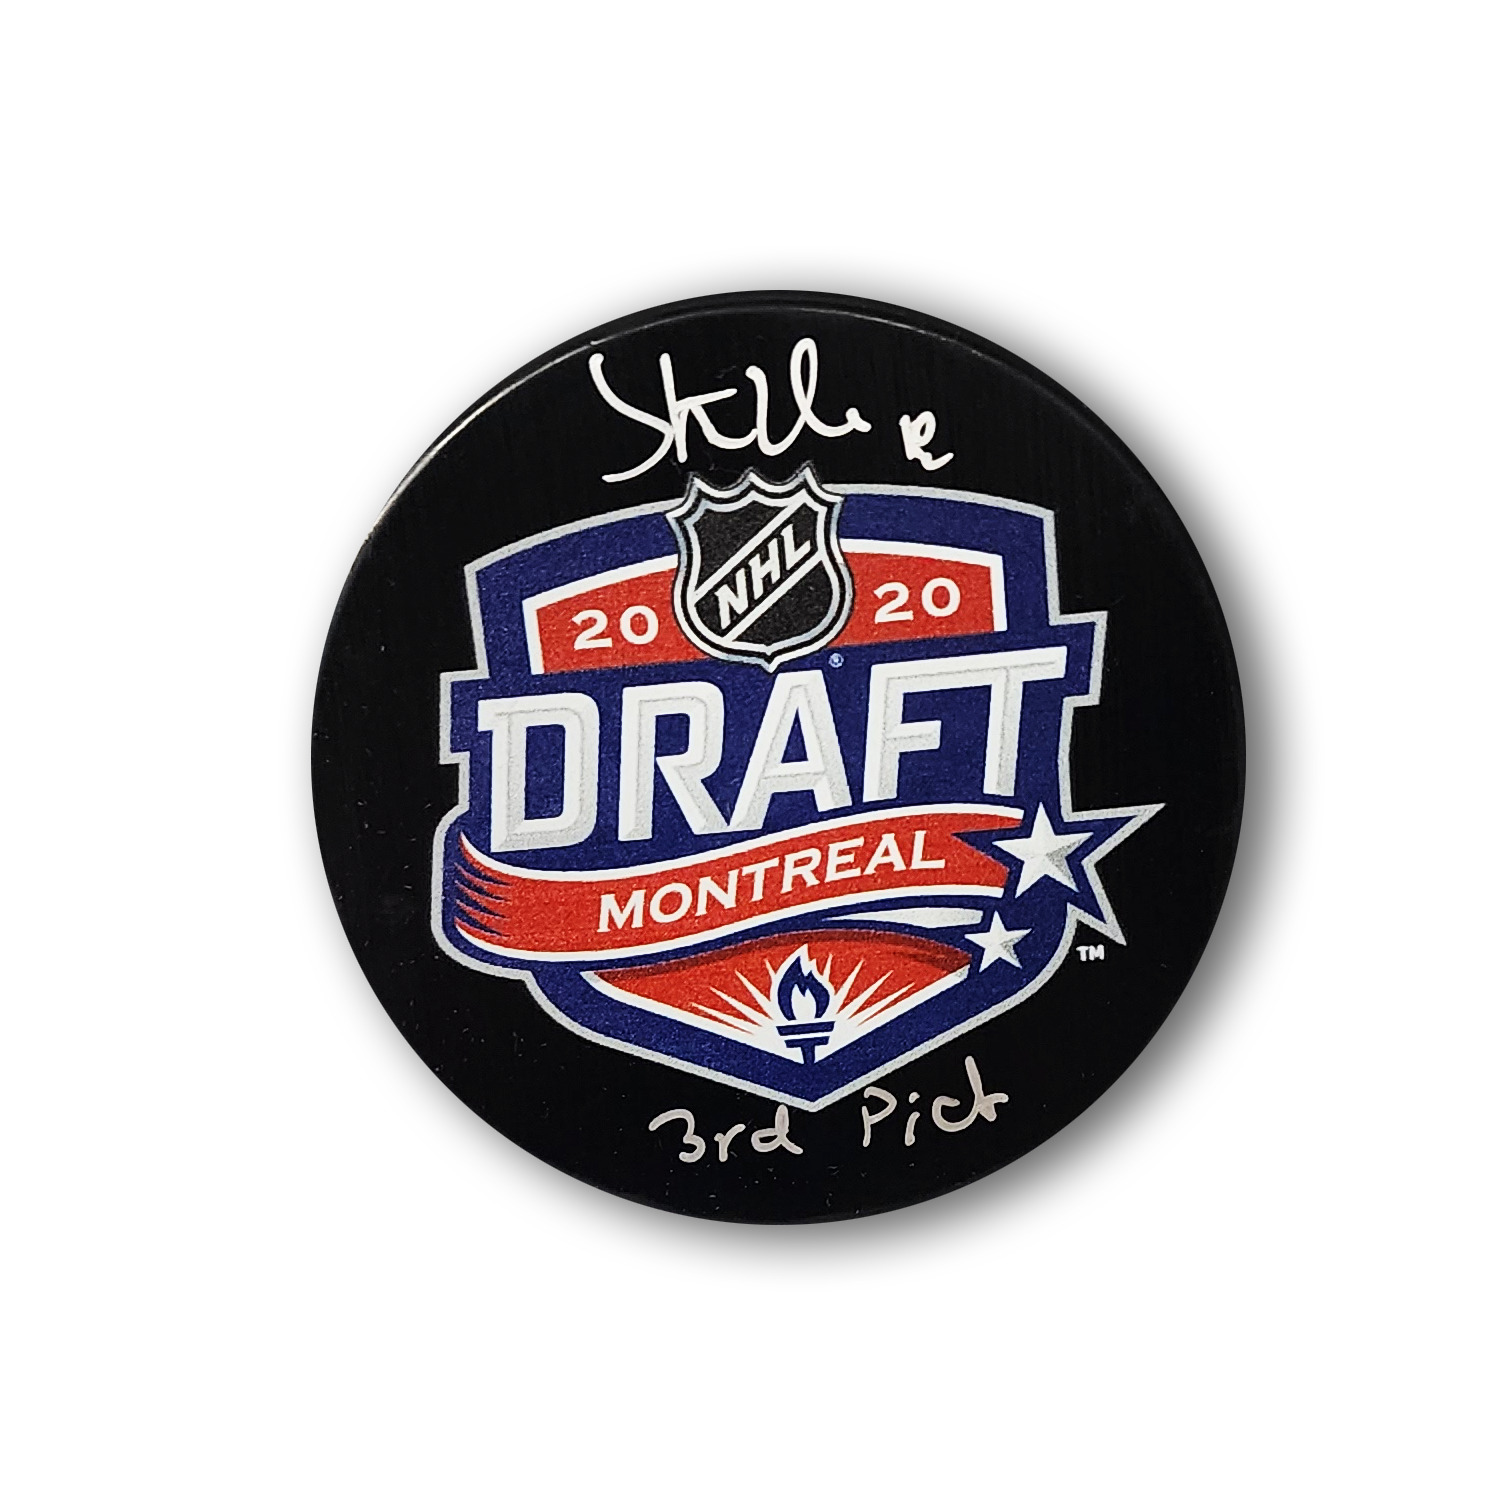 Tim Stutzle Autographed 2020 NHL Draft Hockey Puck Inscribed 3rd Pick